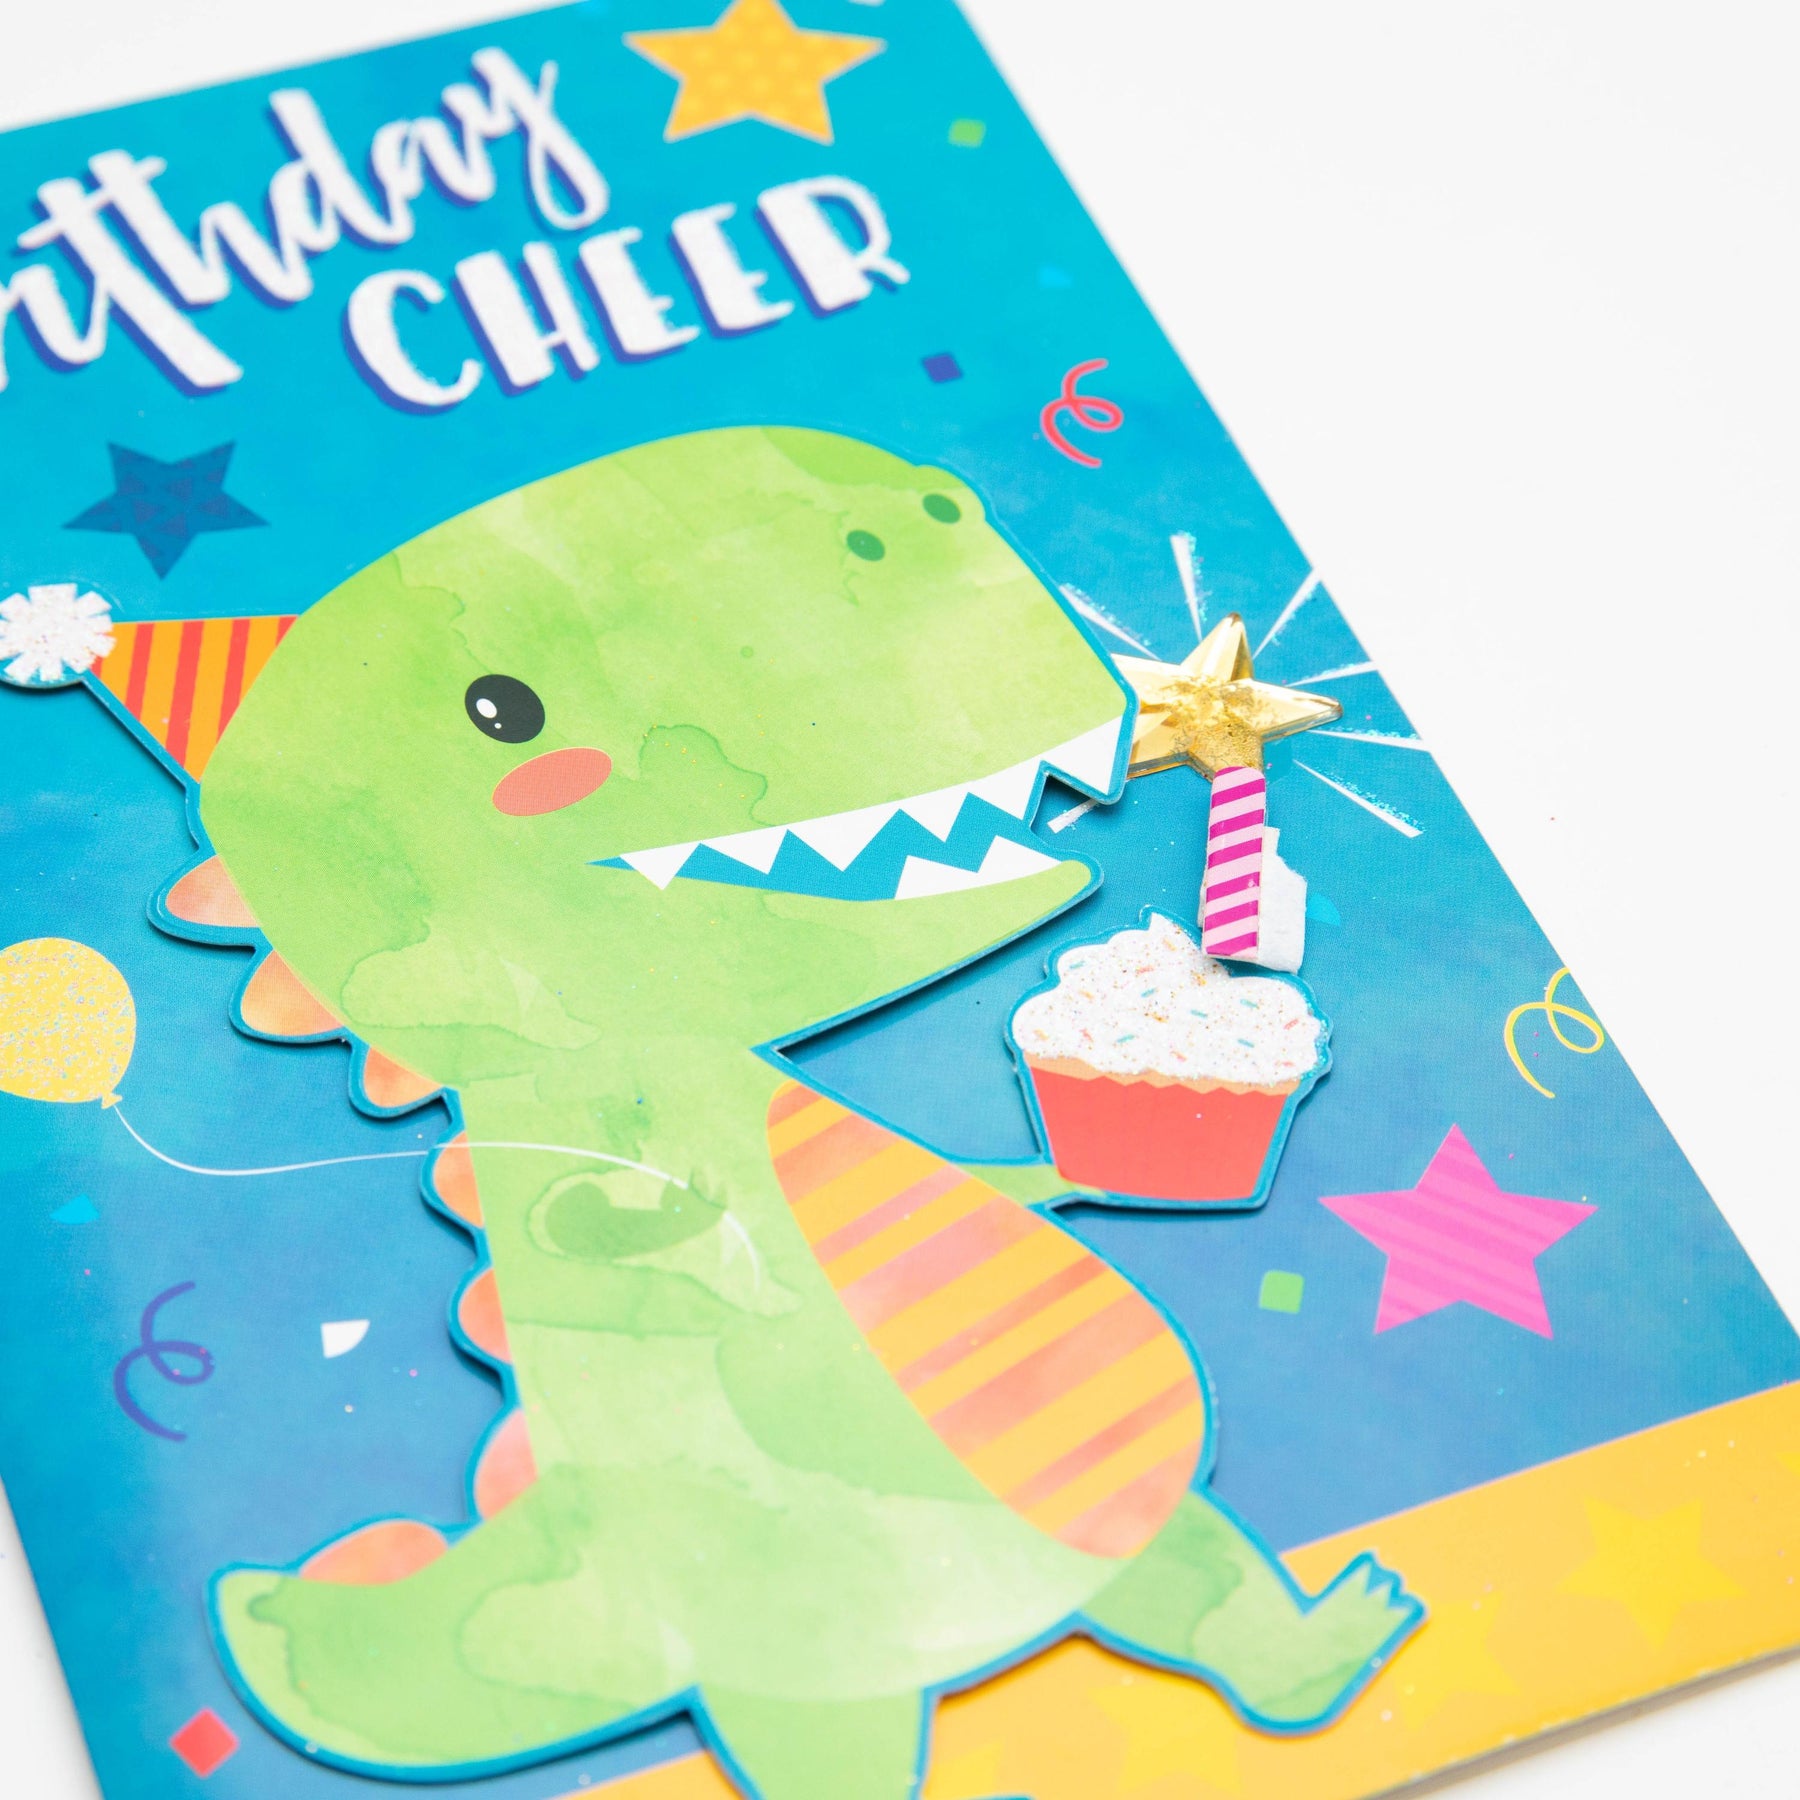 PaperCraft Handmade Kids Birthday Card – Dinosaur Birthday Cheer